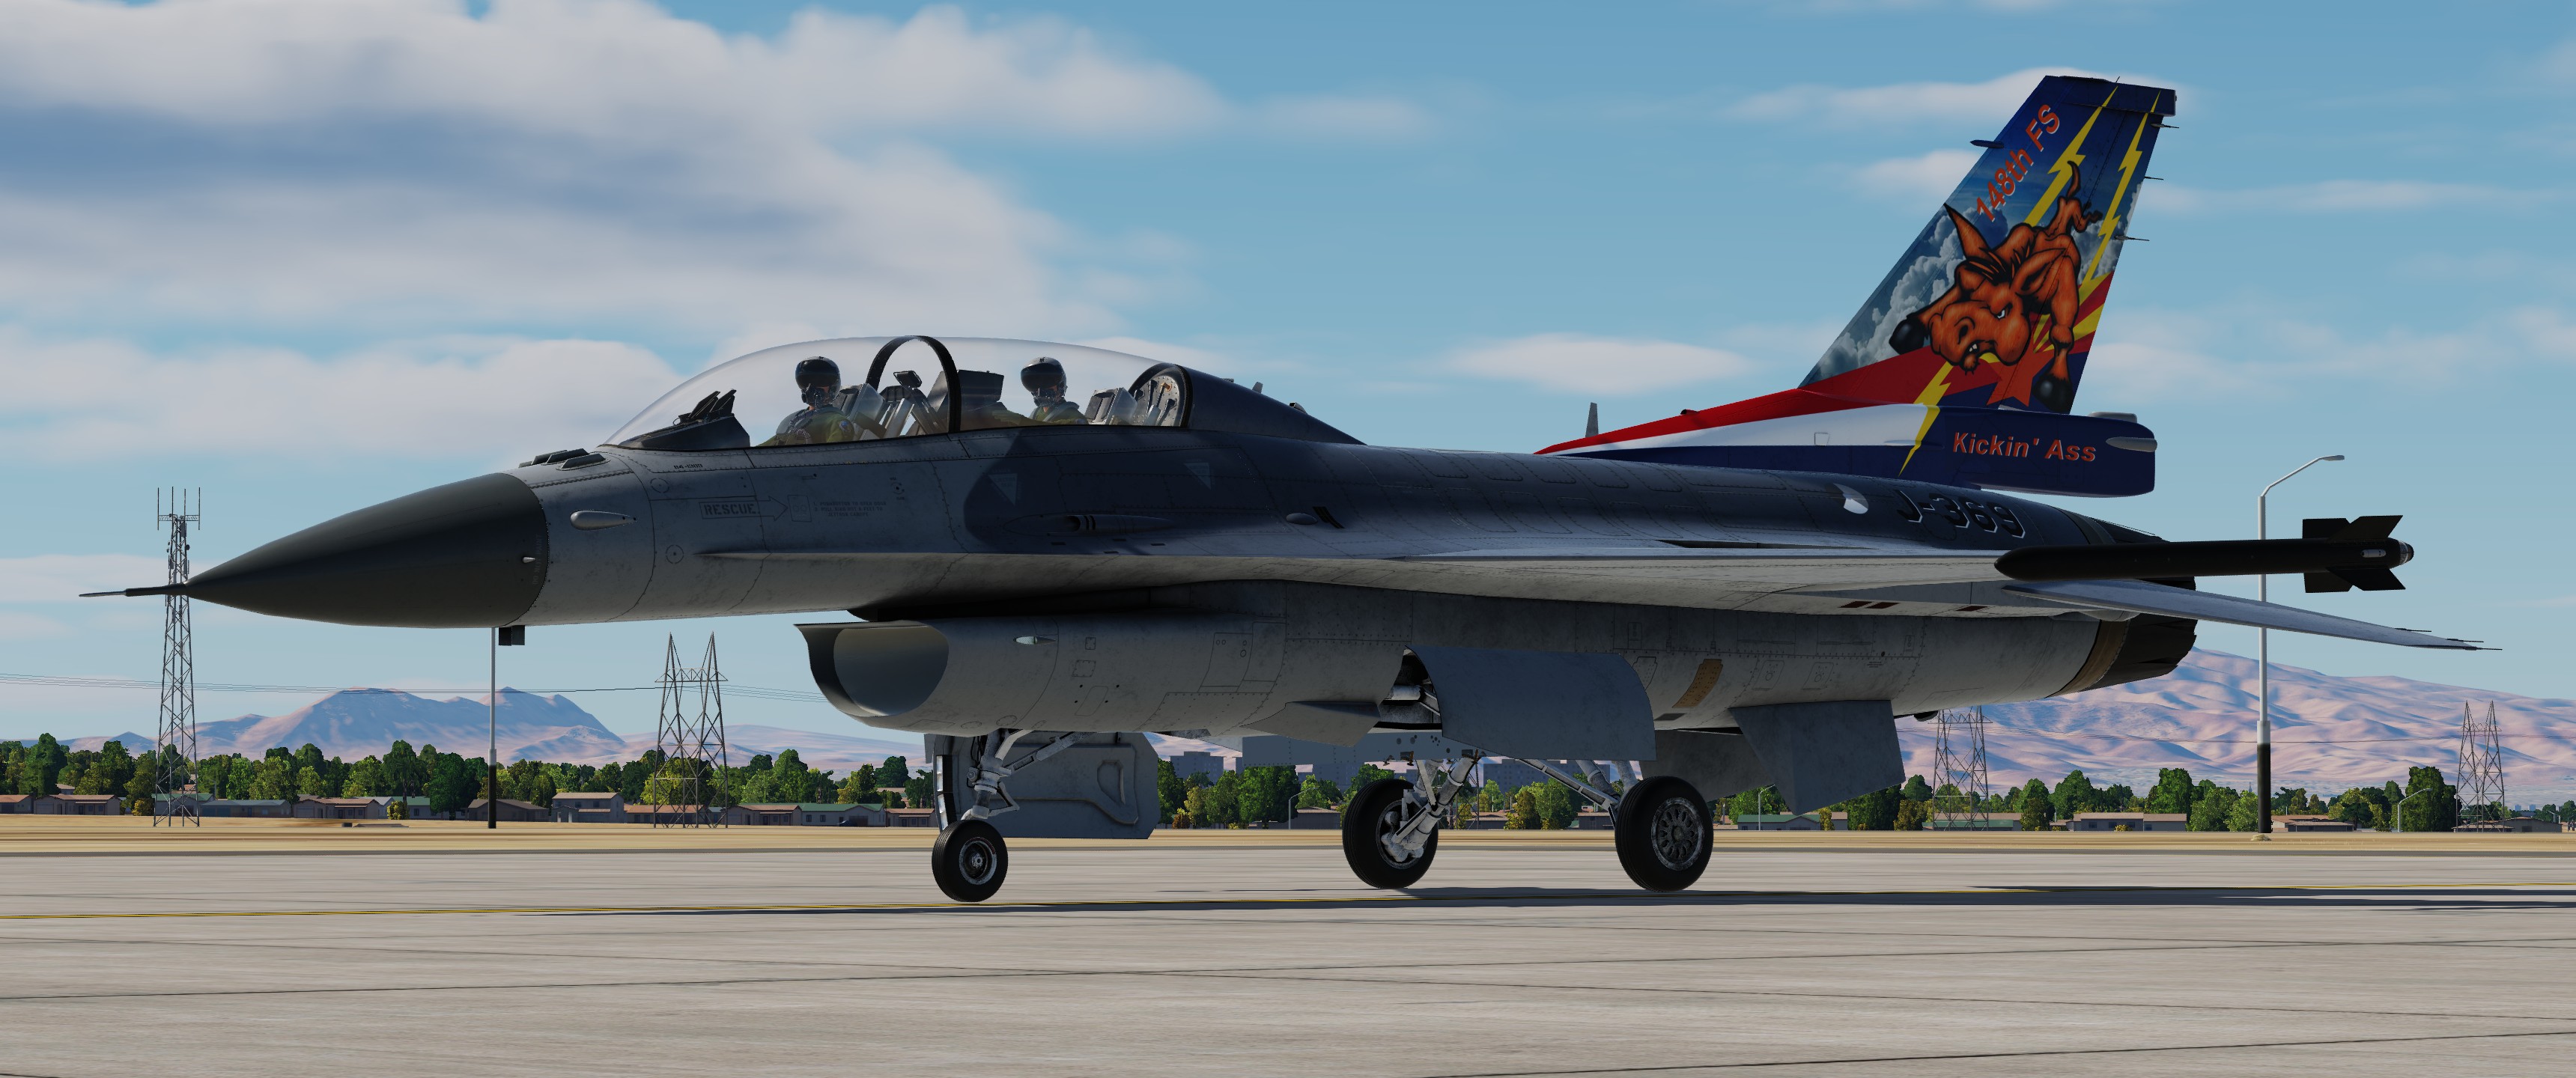 F-16 - Sufa Updates v3-5a Mod by VAG for RNLAF/RNoAF Liveries